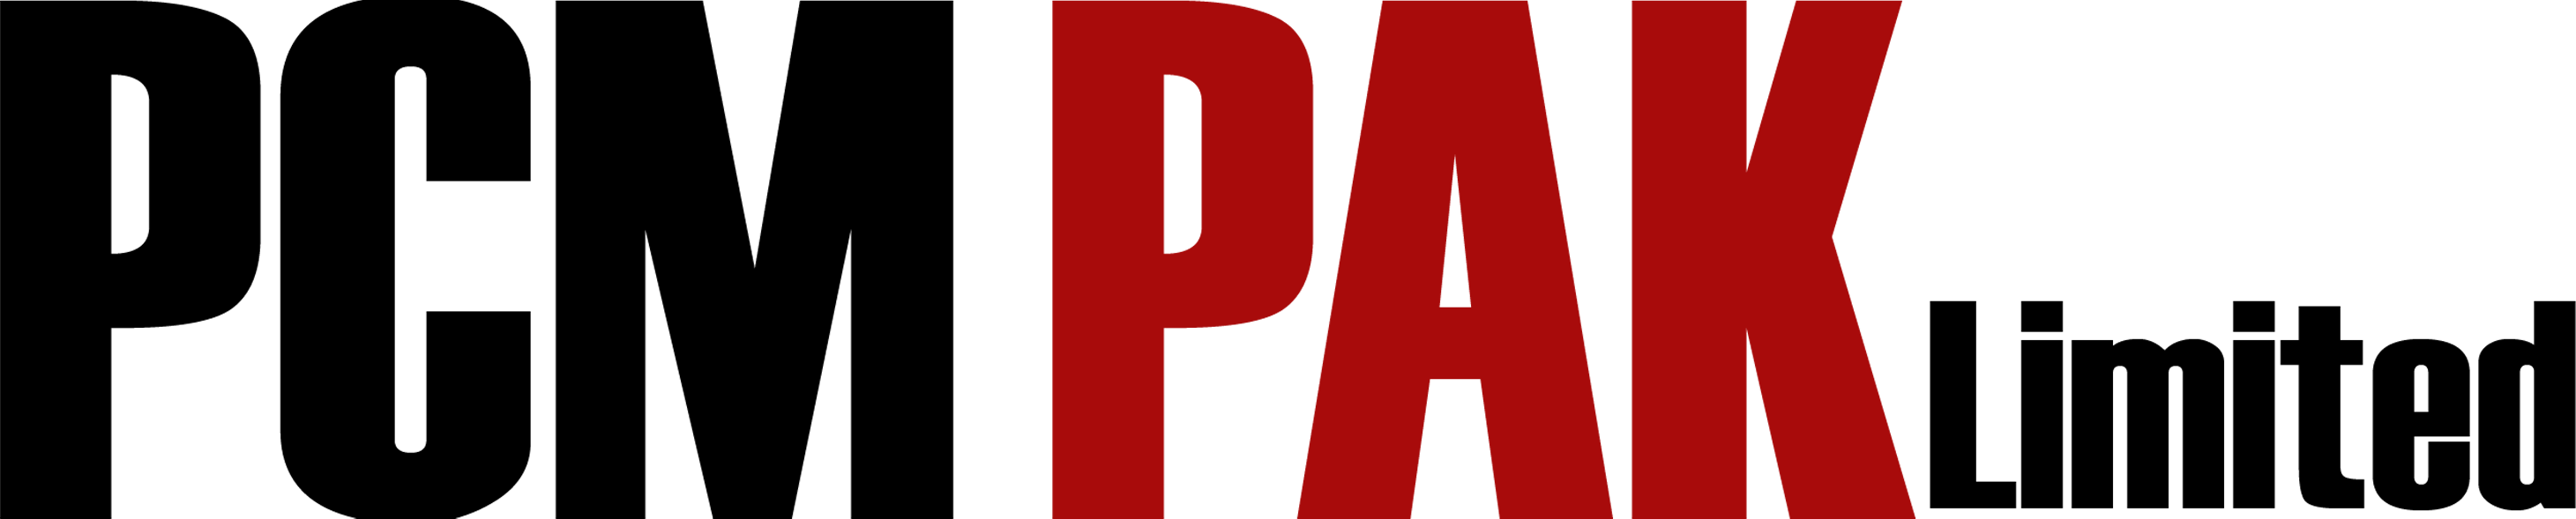 PCM PAK Limited Logo